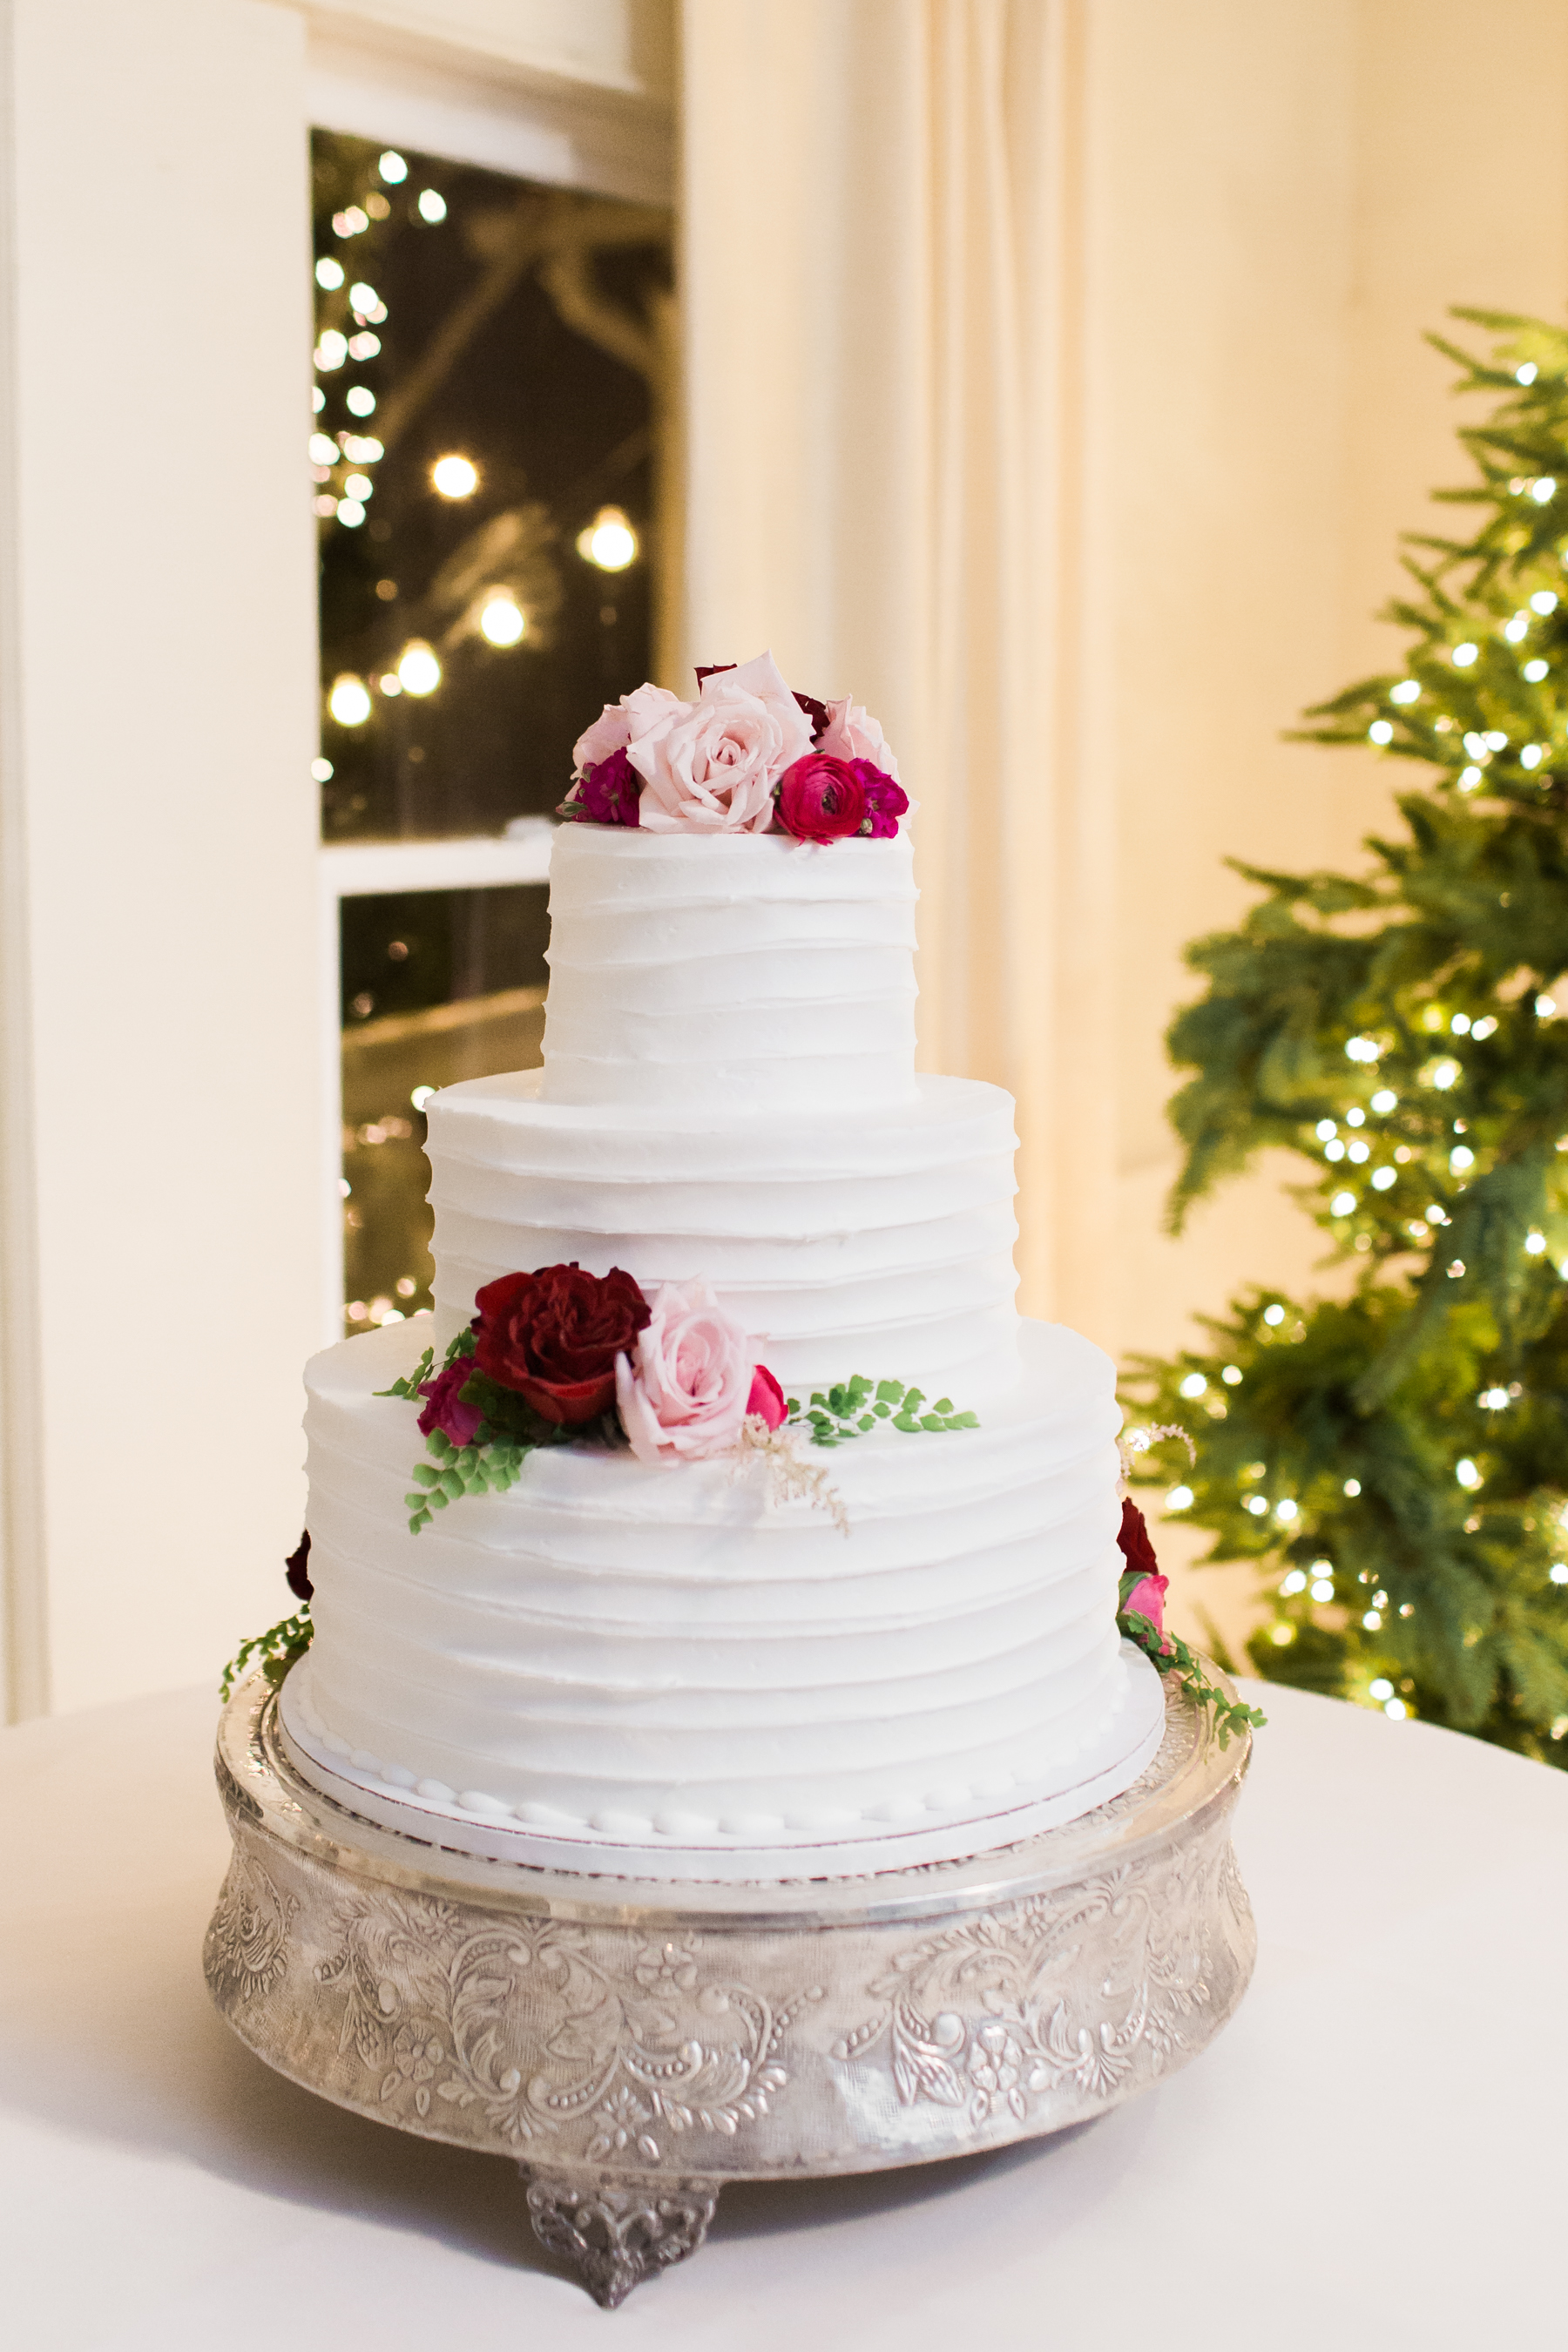 Atlanta wedding cake from Cakes by Darcy